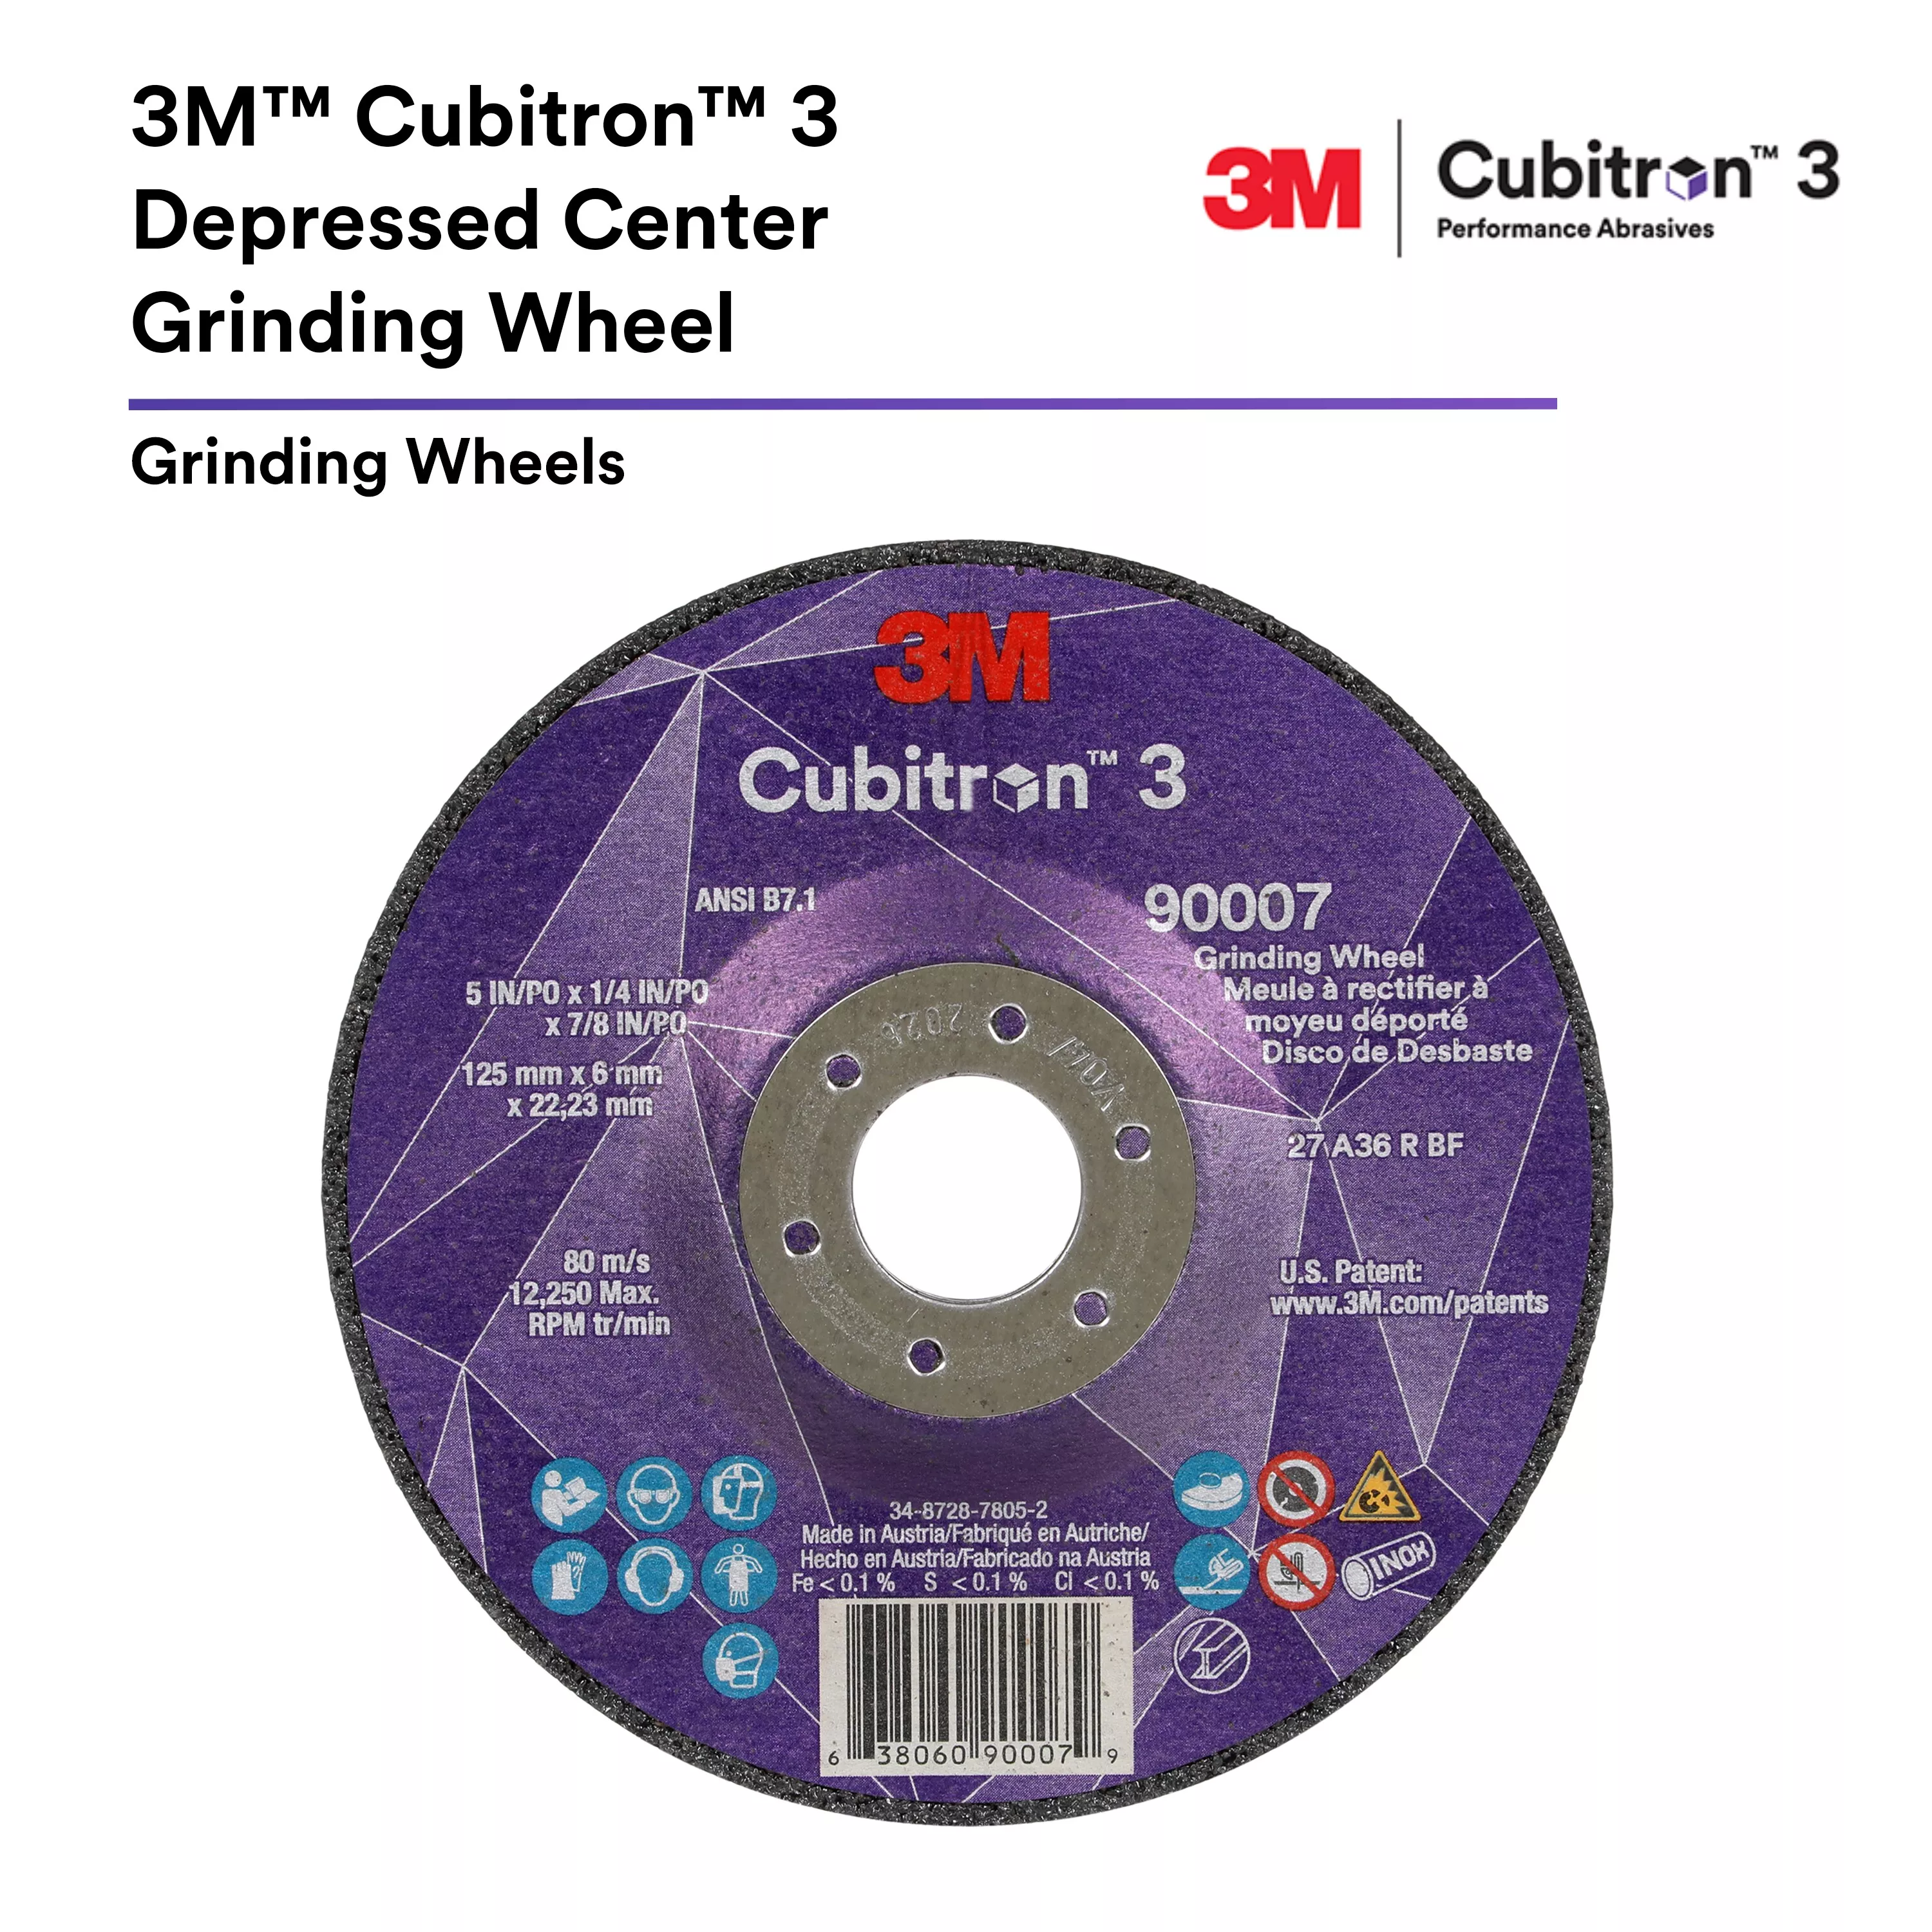 SKU 7100303965 | 3M™ Cubitron™ 3 Depressed Center Grinding Wheel